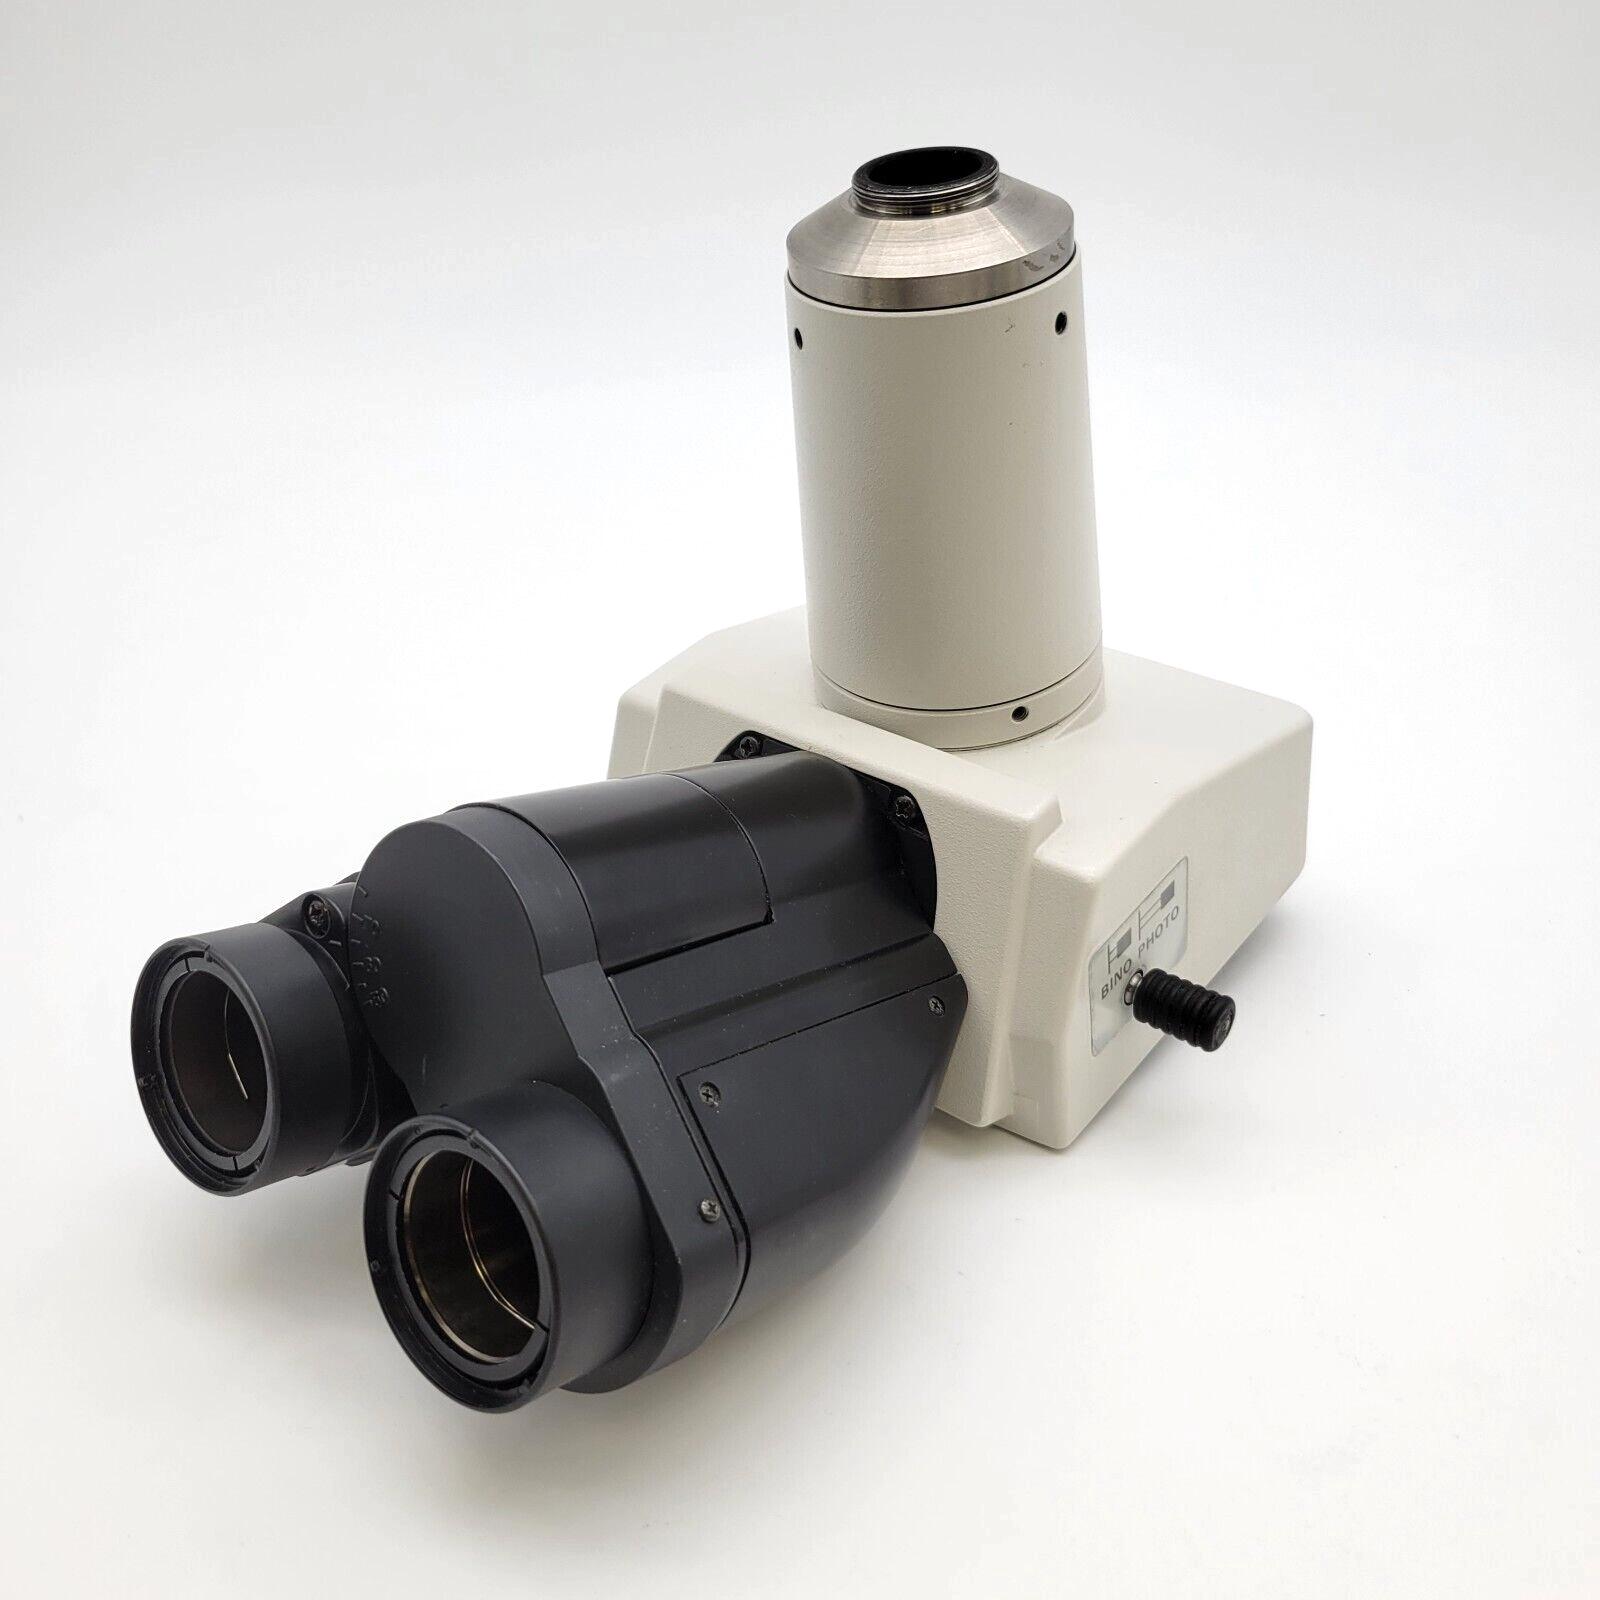 Nikon Microscope Trinocular Head for Eclipse Series